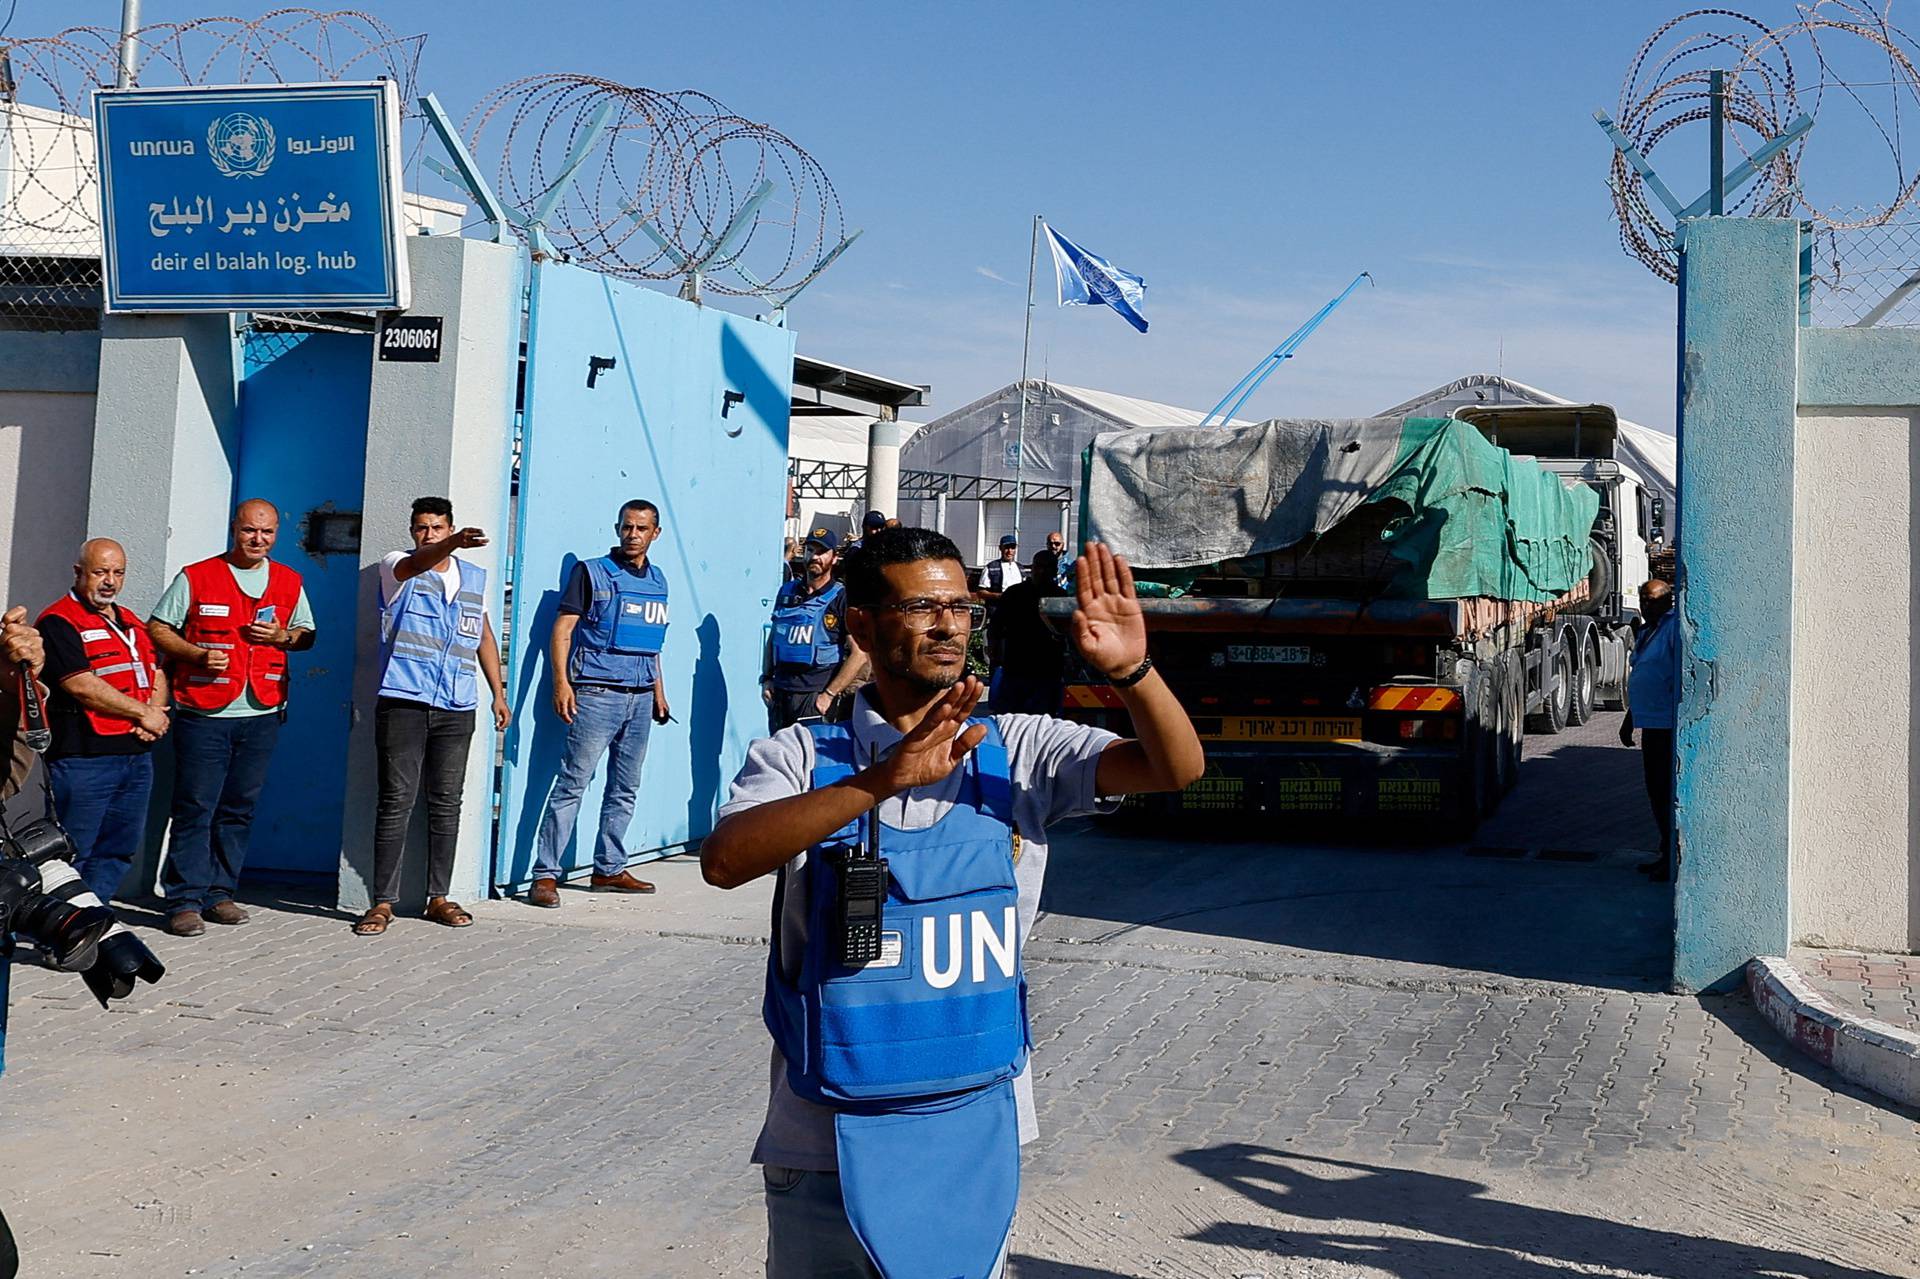 Aid trucks arrive at a UN storage facility in the central Gaza Strip